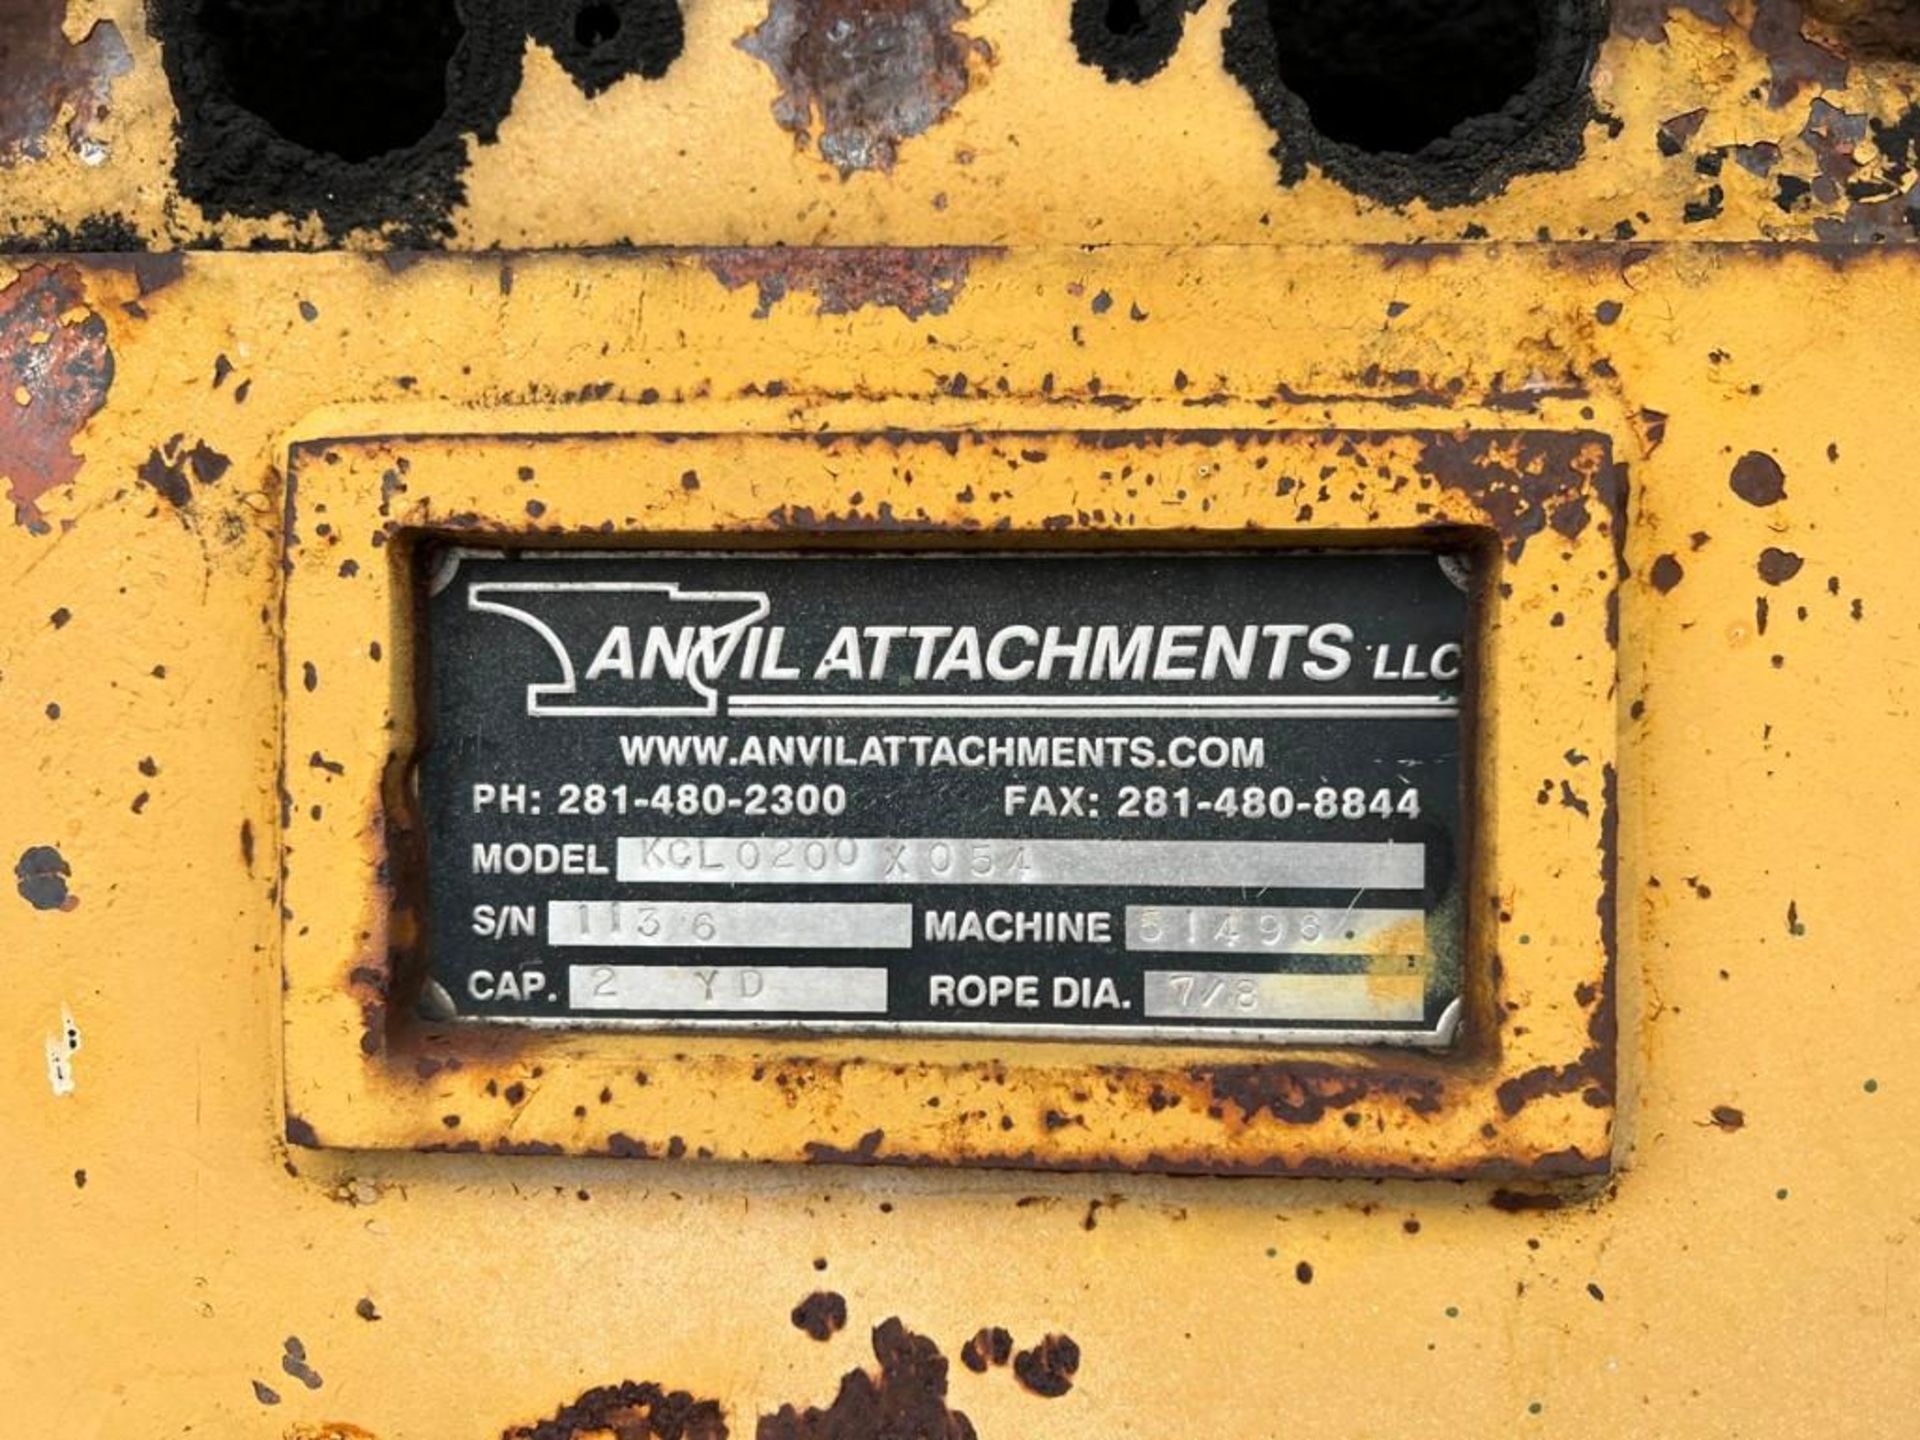 Anvil Attachments, LLC. 2-Yard Capacity Scoop, Model: KCL0200X054, S/N: 1136 - Image 2 of 2